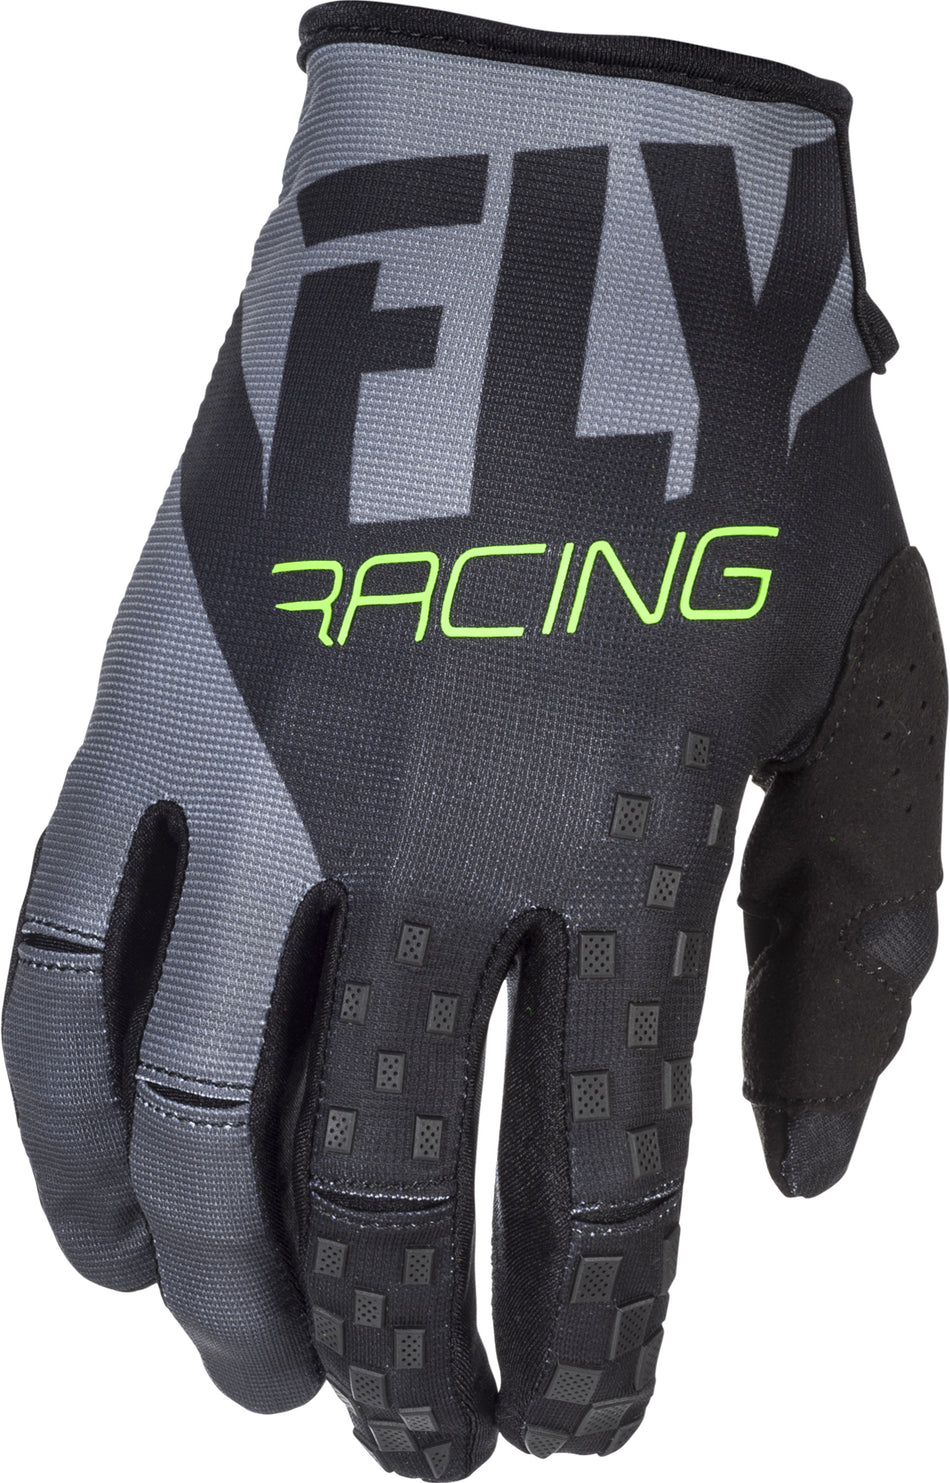 FLY RACING Kinetic Gloves Black/Grey Sz 7 371-41007